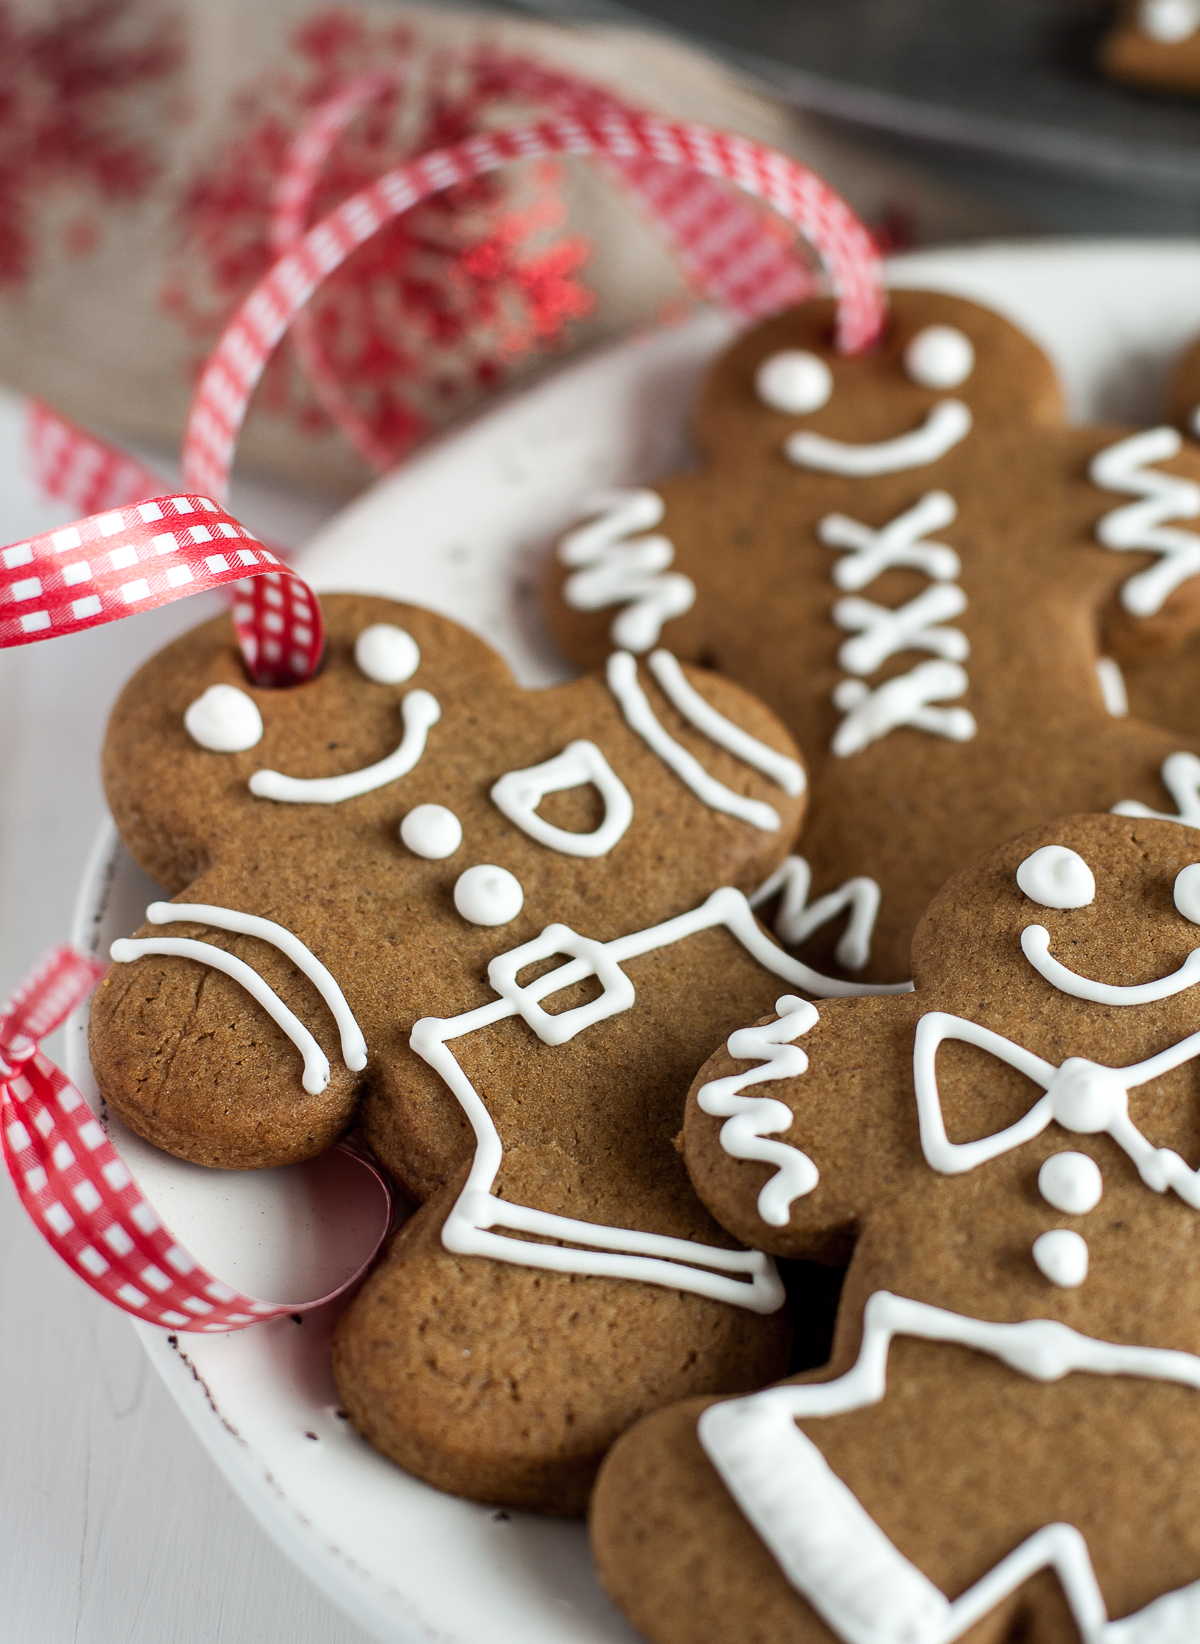 DIY decorated gingerbread cookies (via countrycupboardcookies.com)